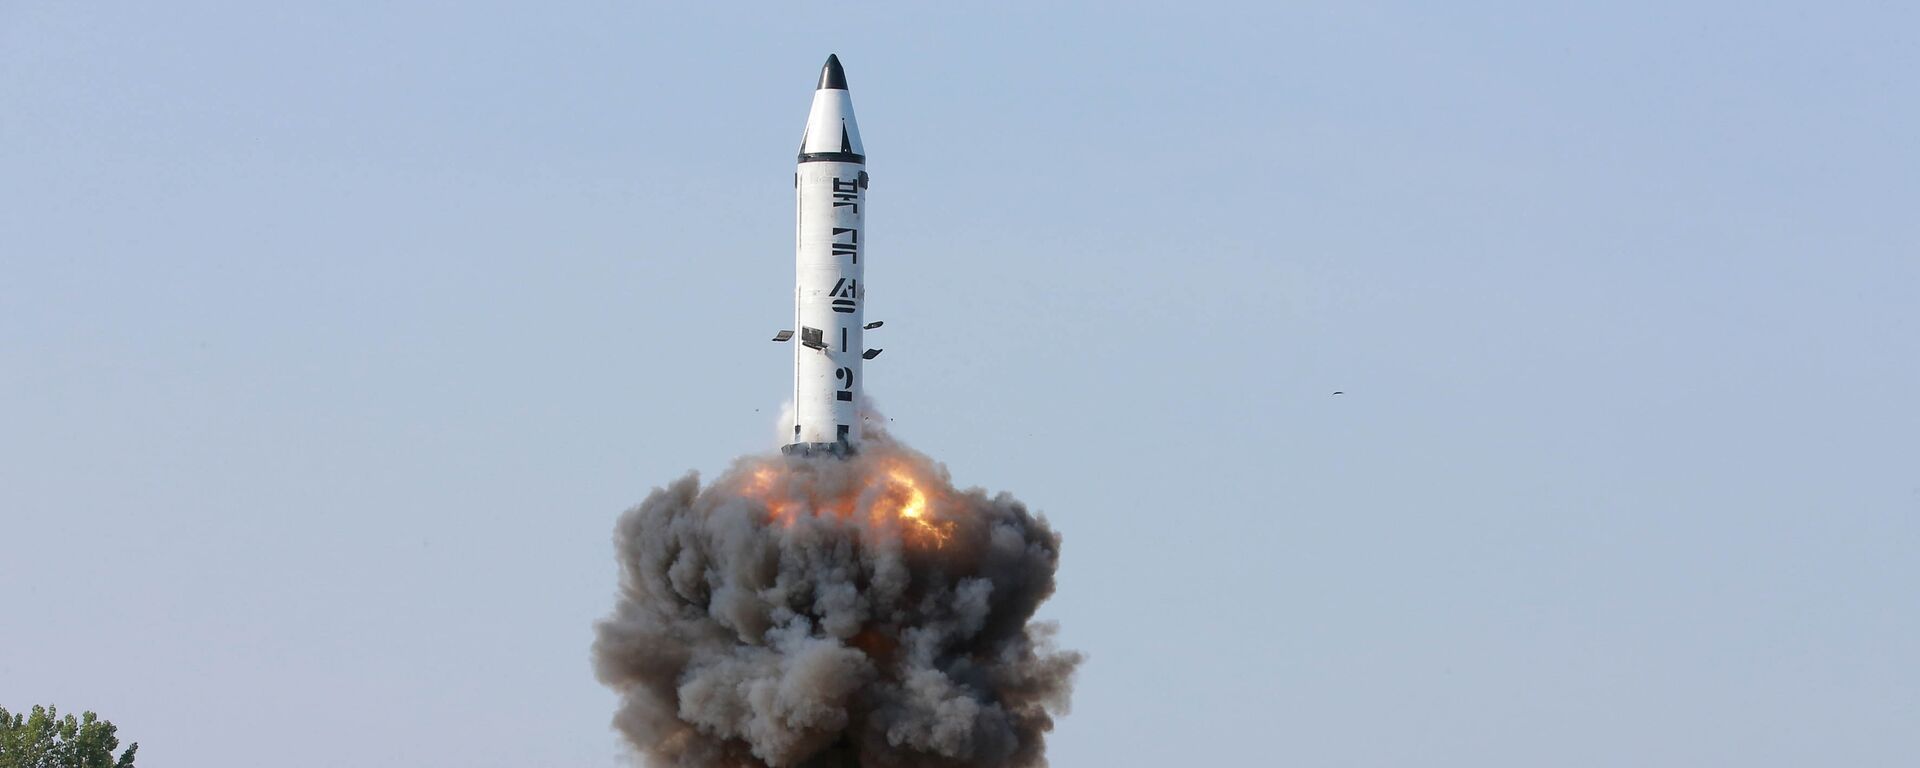 Corea del Norte lanza misil balístico - Sputnik Mundo, 1920, 15.09.2021